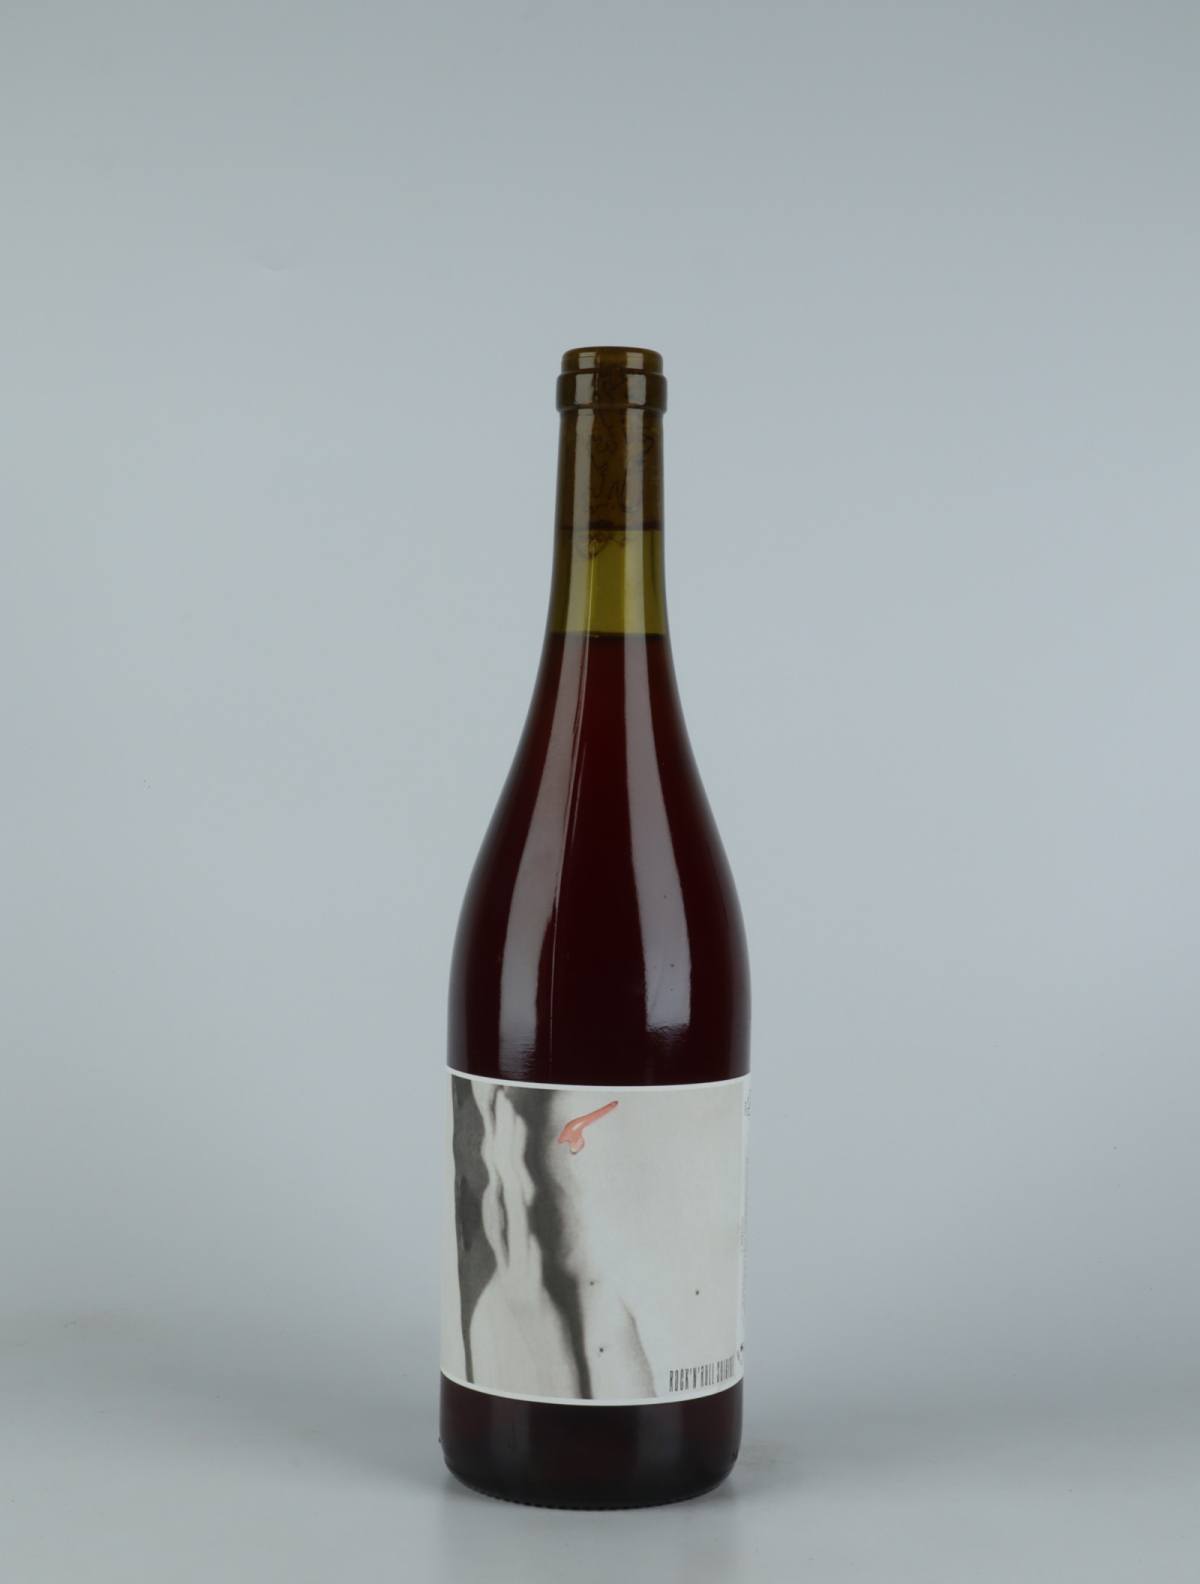 A bottle 2021 Rock N Roll Suicide Orange wine from Ad Vinum, Gard in France